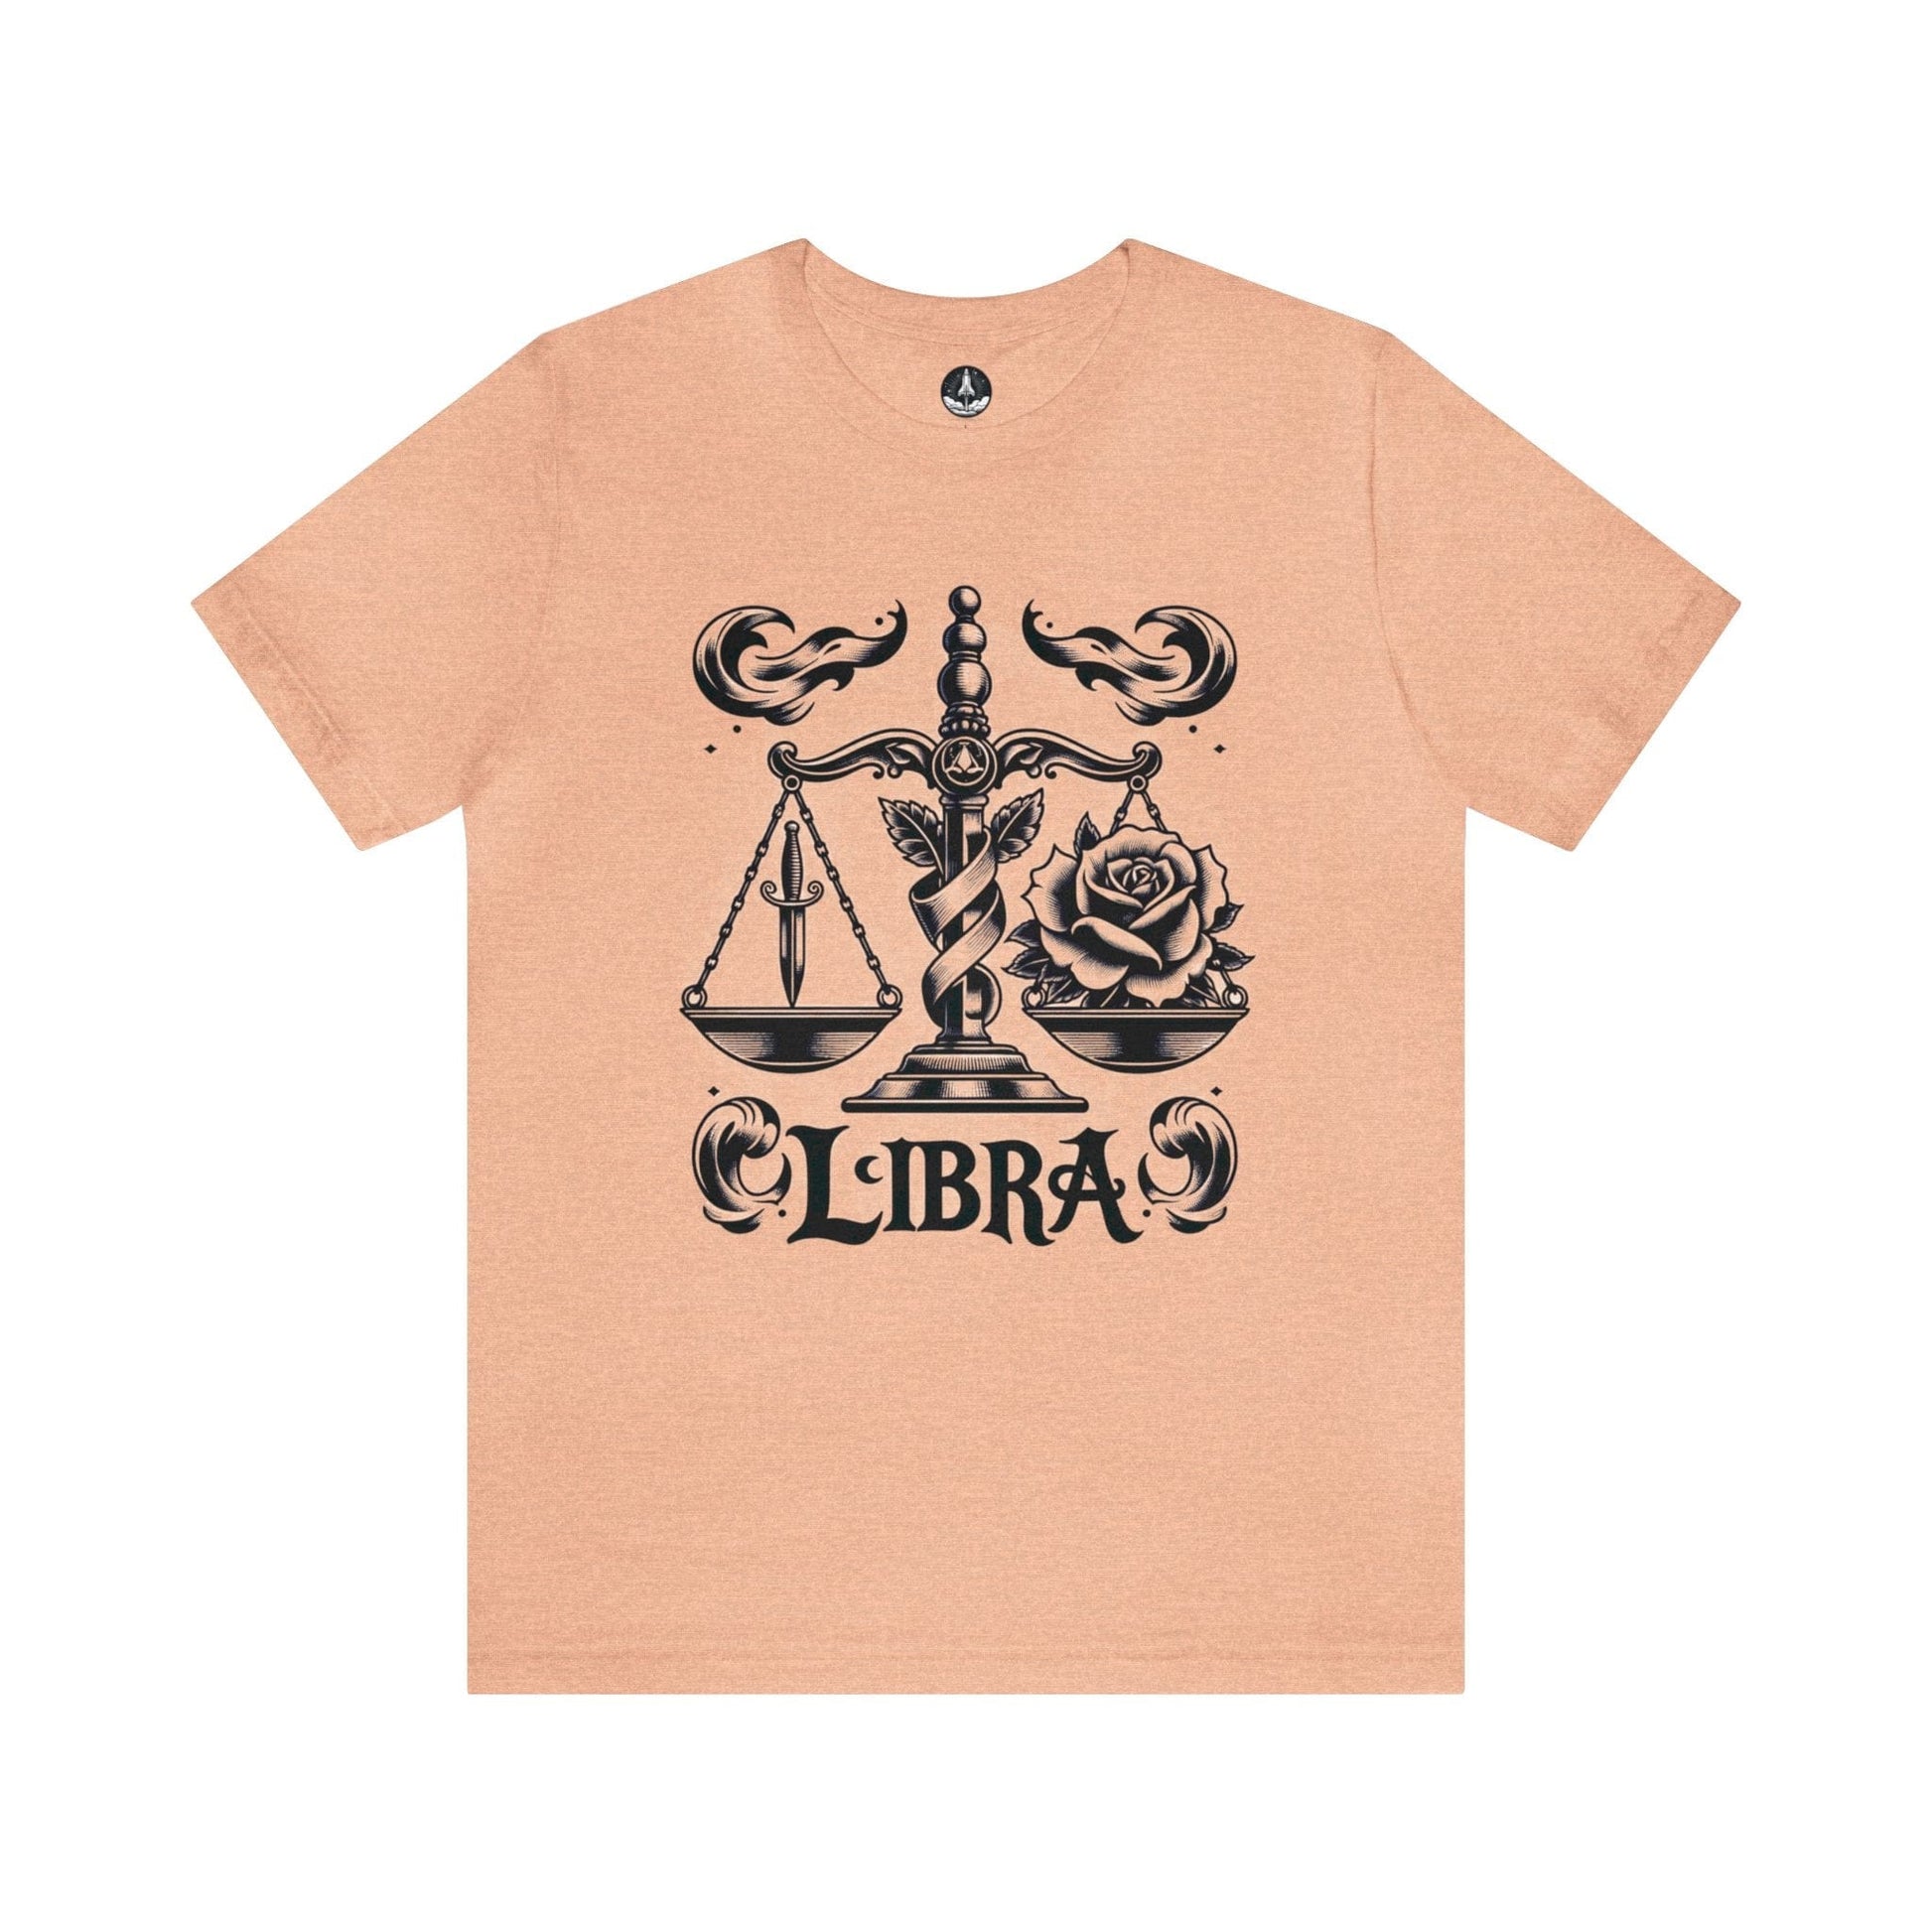 T-Shirt Heather Peach / S Scales & Roses Libra T-Shirt